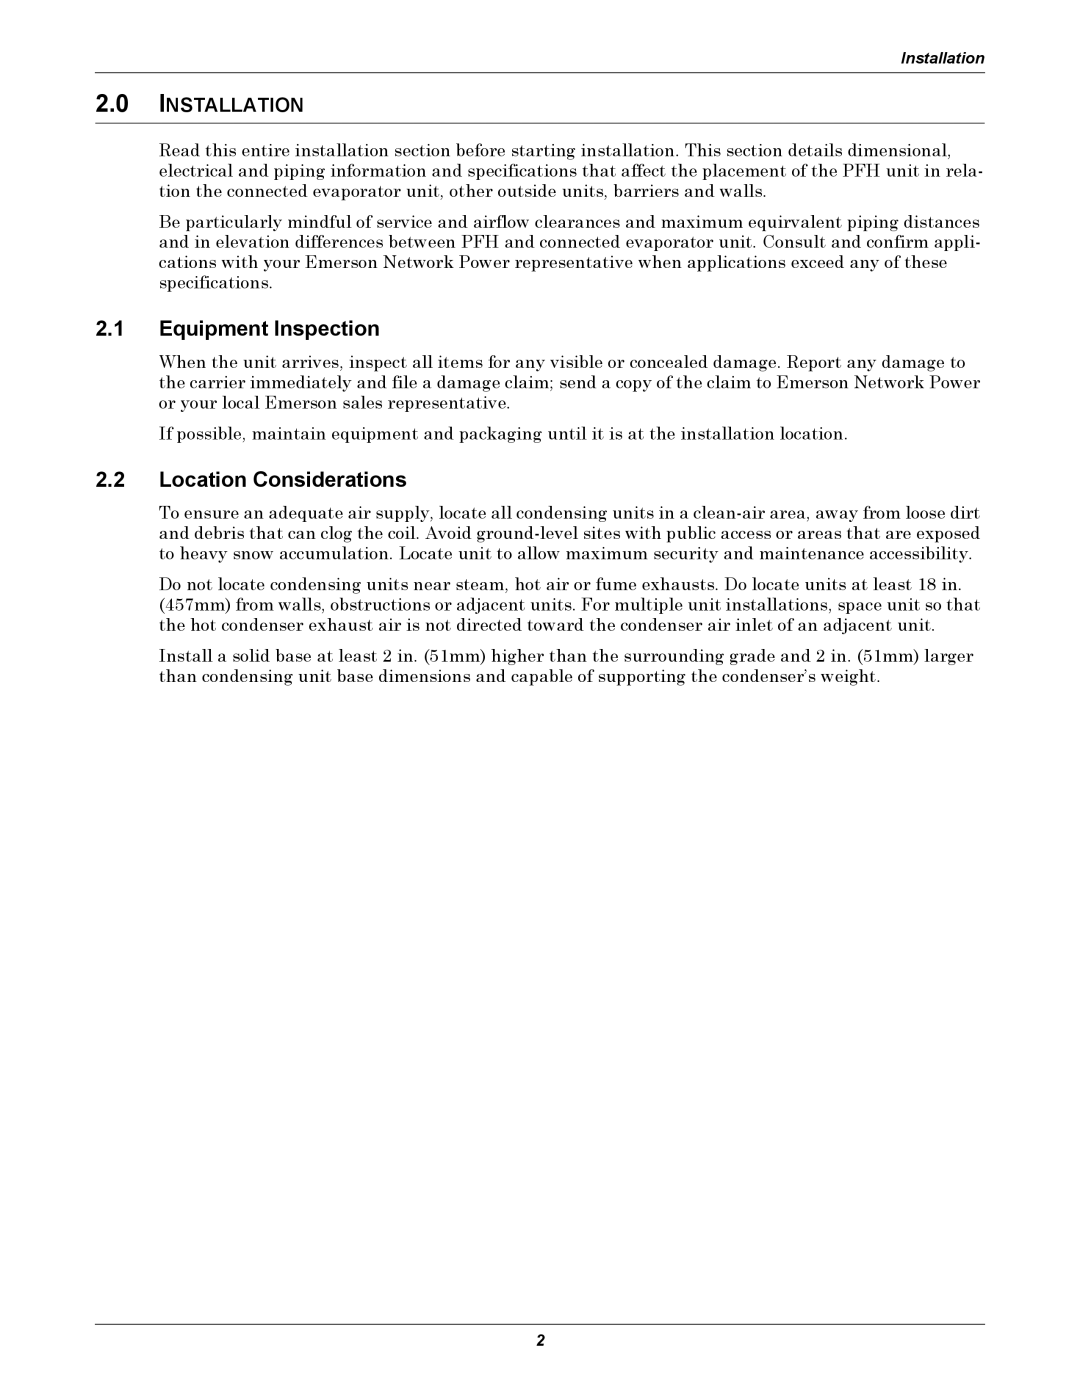 Emerson Figure i manual 2.1Equipment Inspection, 2.2Location Considerations, 2.0INSTALLATION 